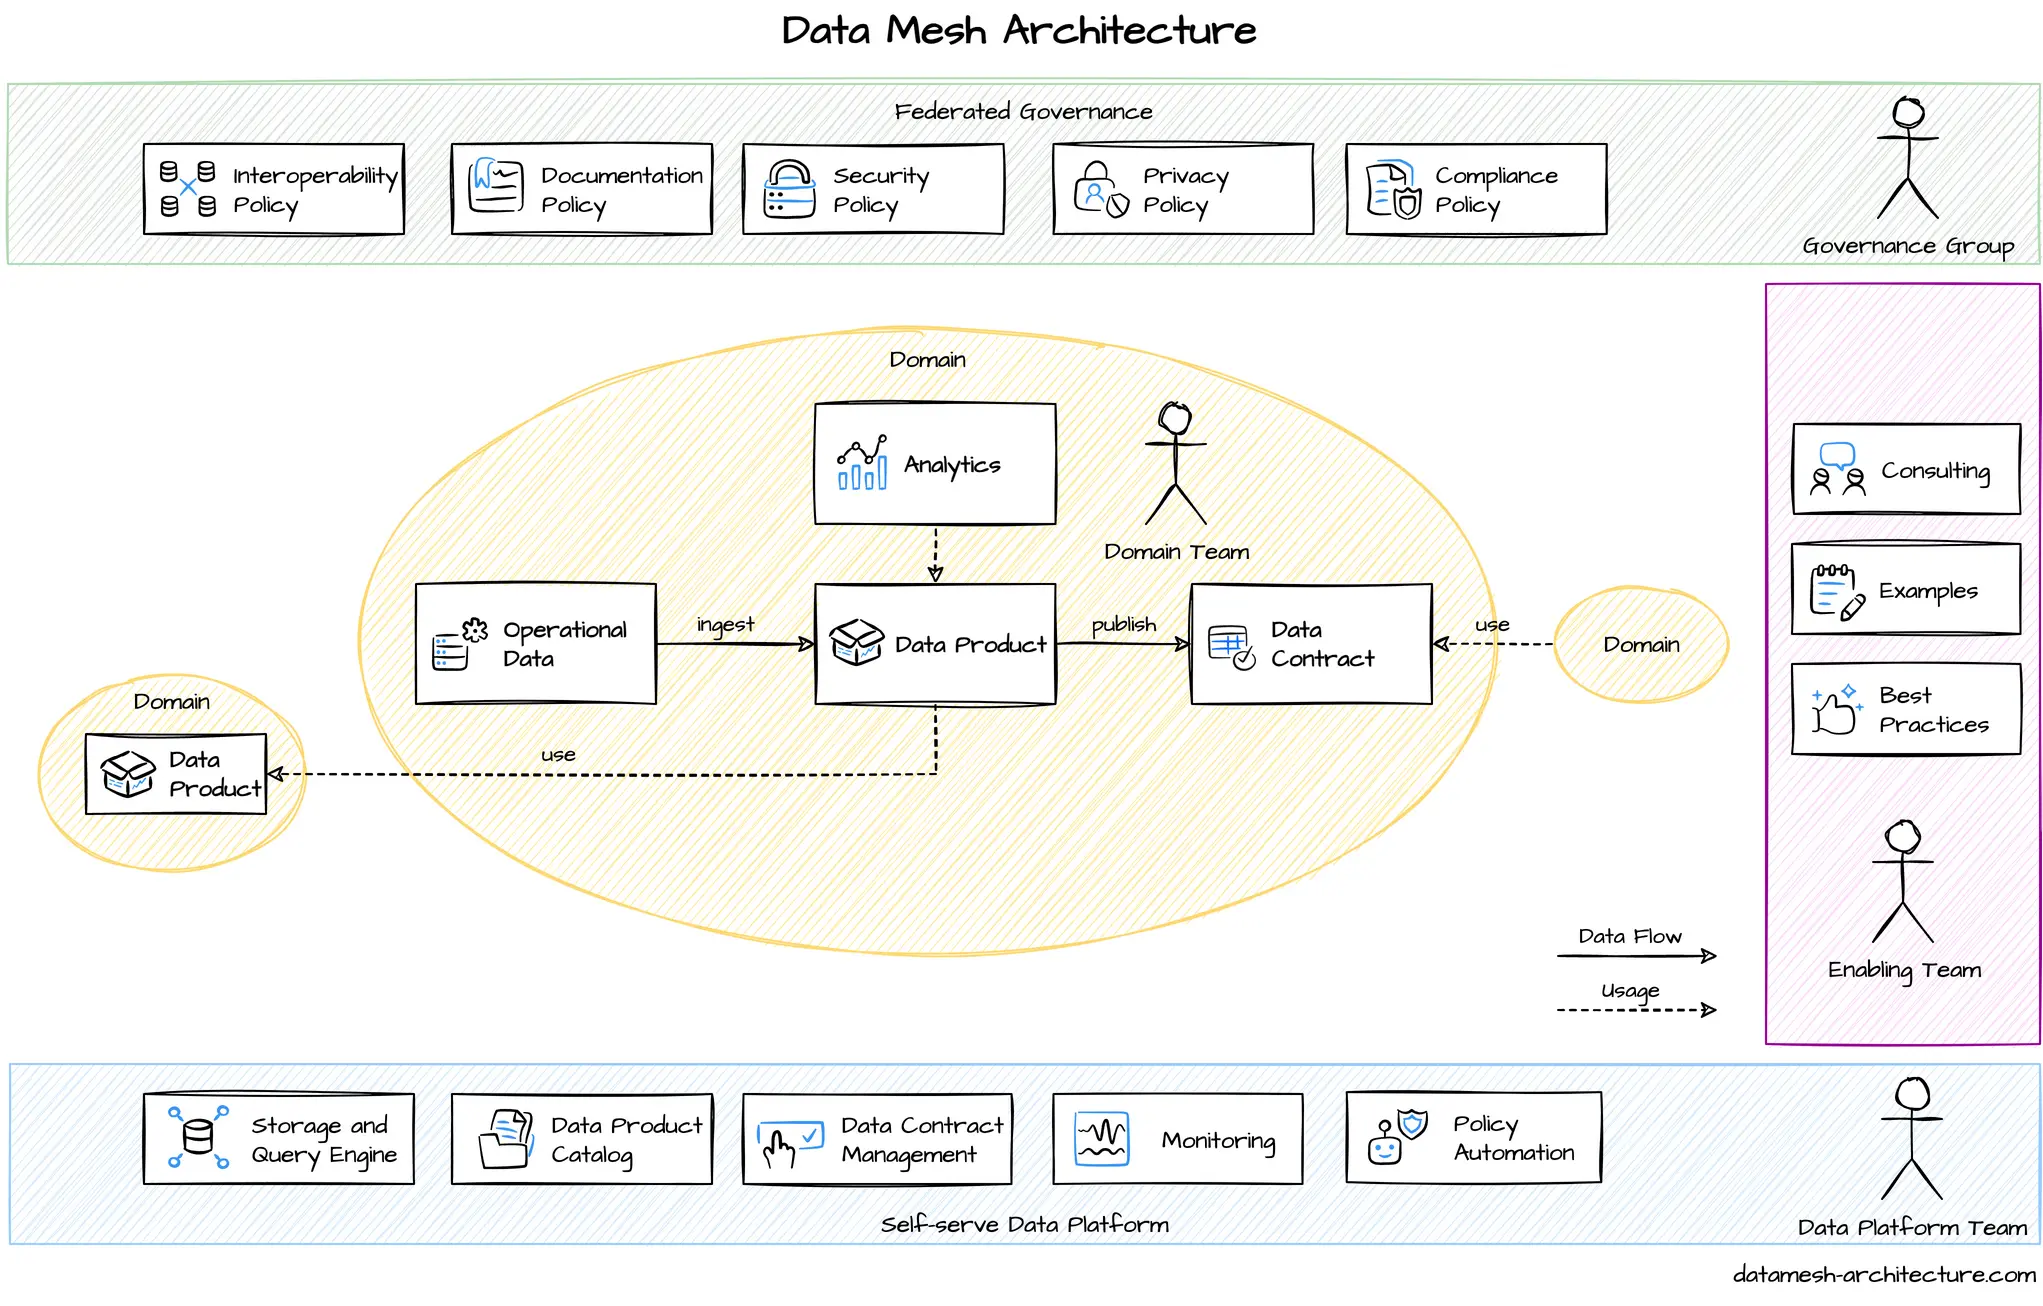 Data Mesh Architecture image